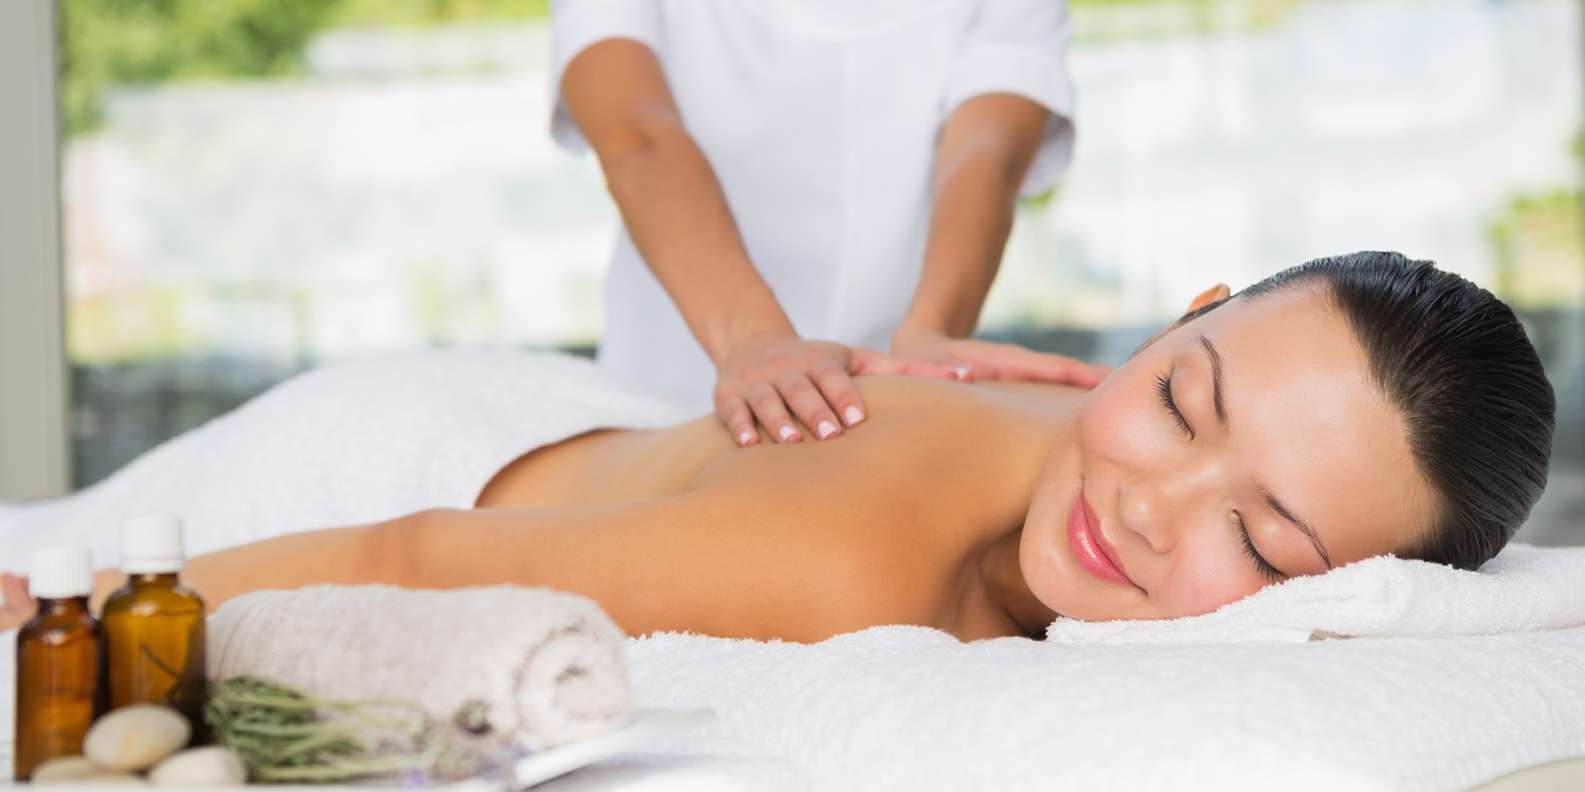 Massage most. Кайнарджа спа. 5 Фактов о пользе массажа. Massagedxb. Массаж антистресс расслабляющий антураж.